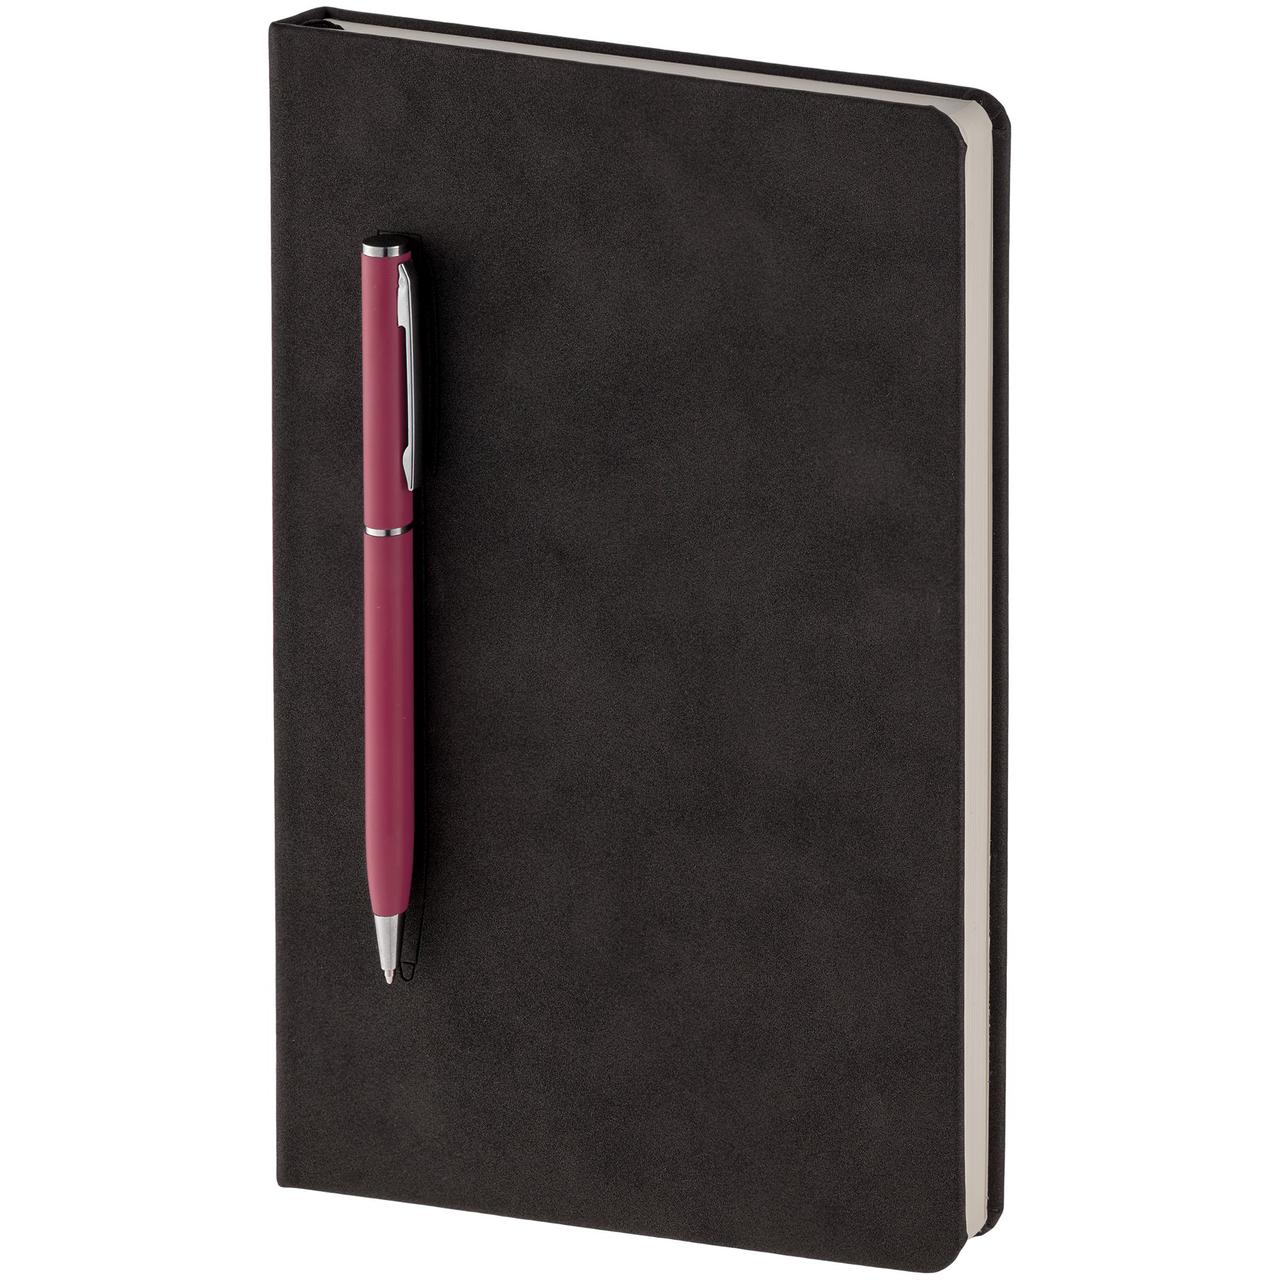 Блокнот Magnet Chrome с ручкой, черно-розовый (артикул 15016.15), фото 1